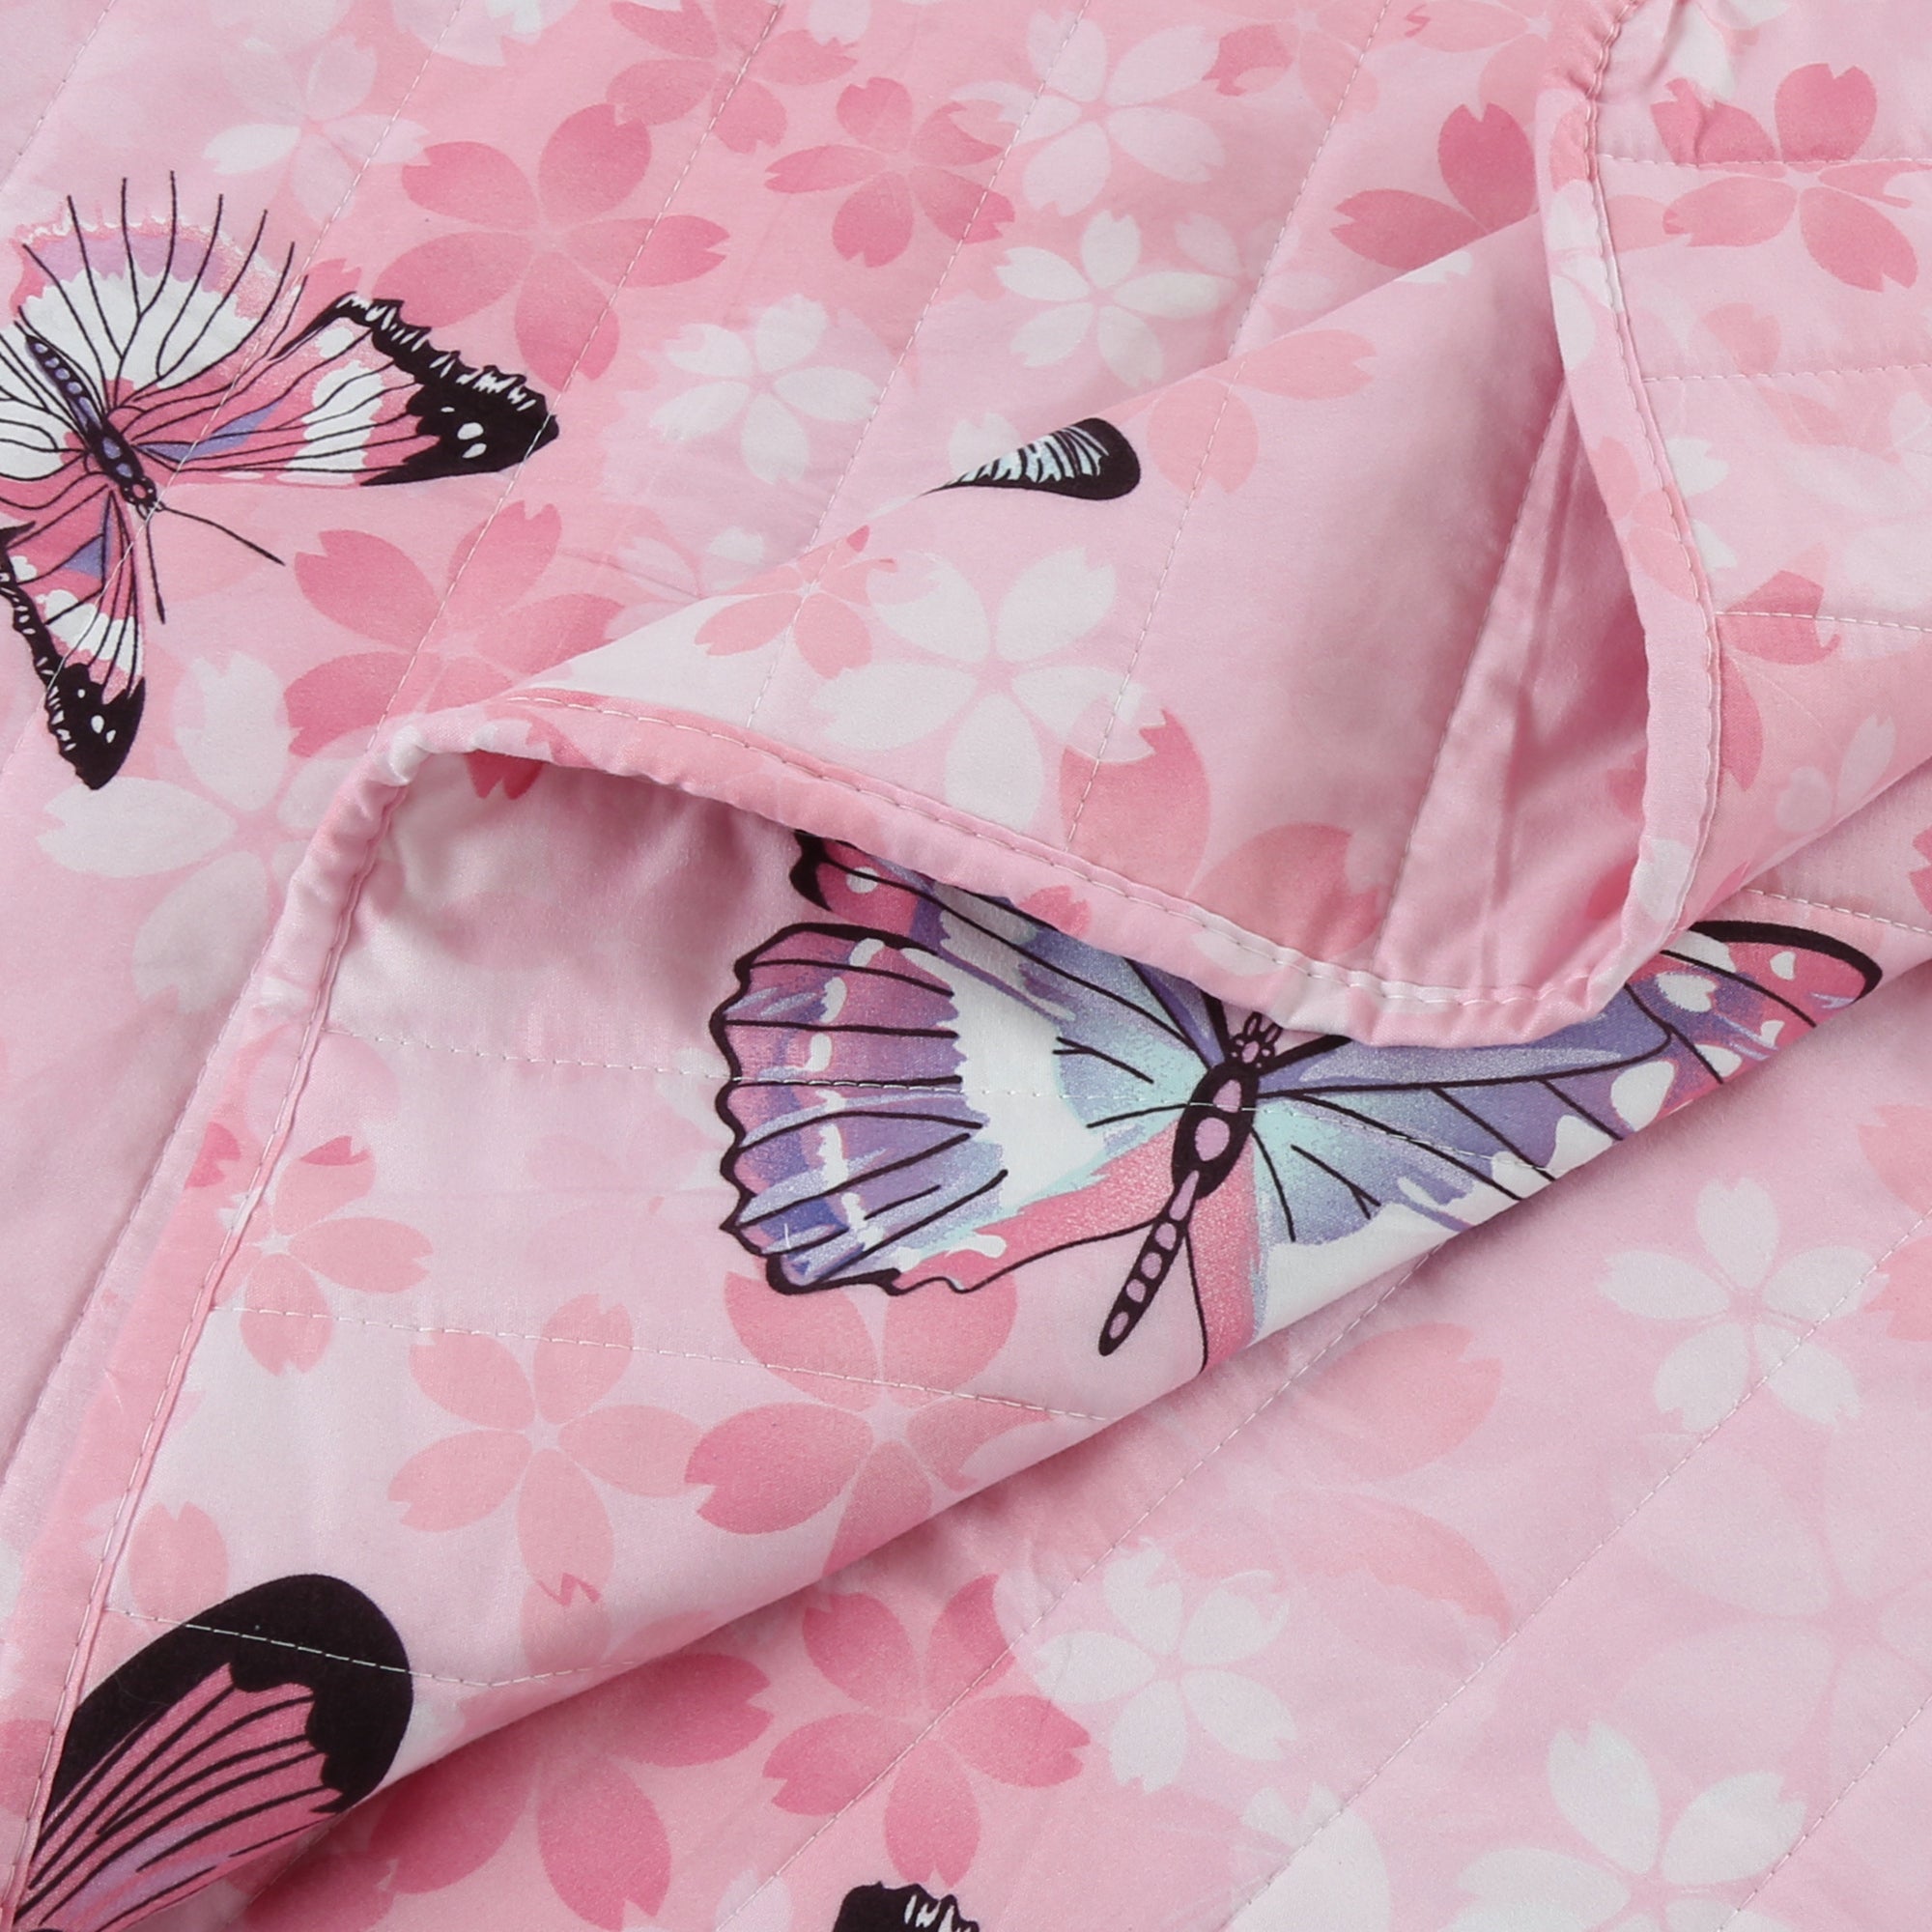 2/3 Piece Kids Bedspread Quilts Set for Teens Girls Bed Coverlet Bunk Girls Comforter Butterfly A72